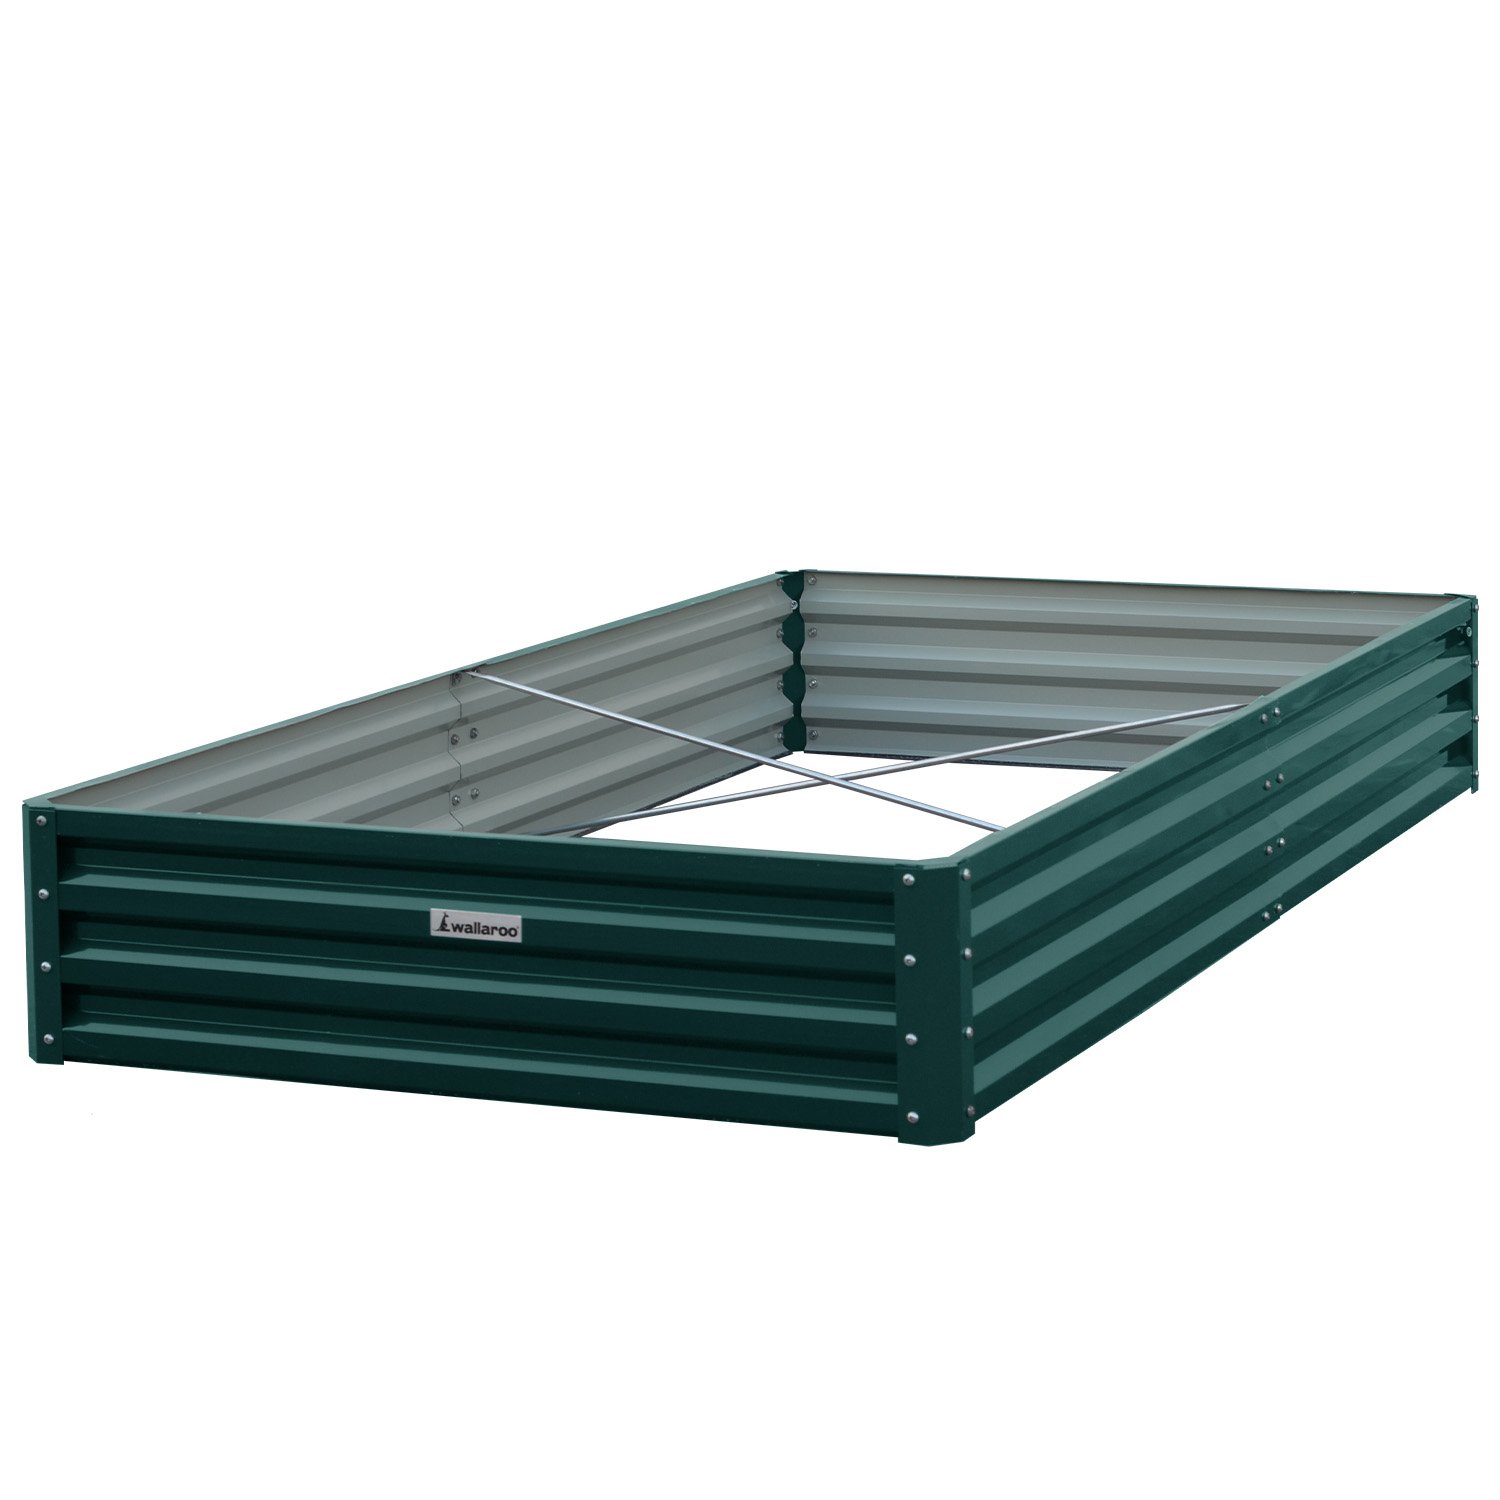 Wallaroo Garden Bed 240 x 120 x 30cm Galvanized Steel - Green 1